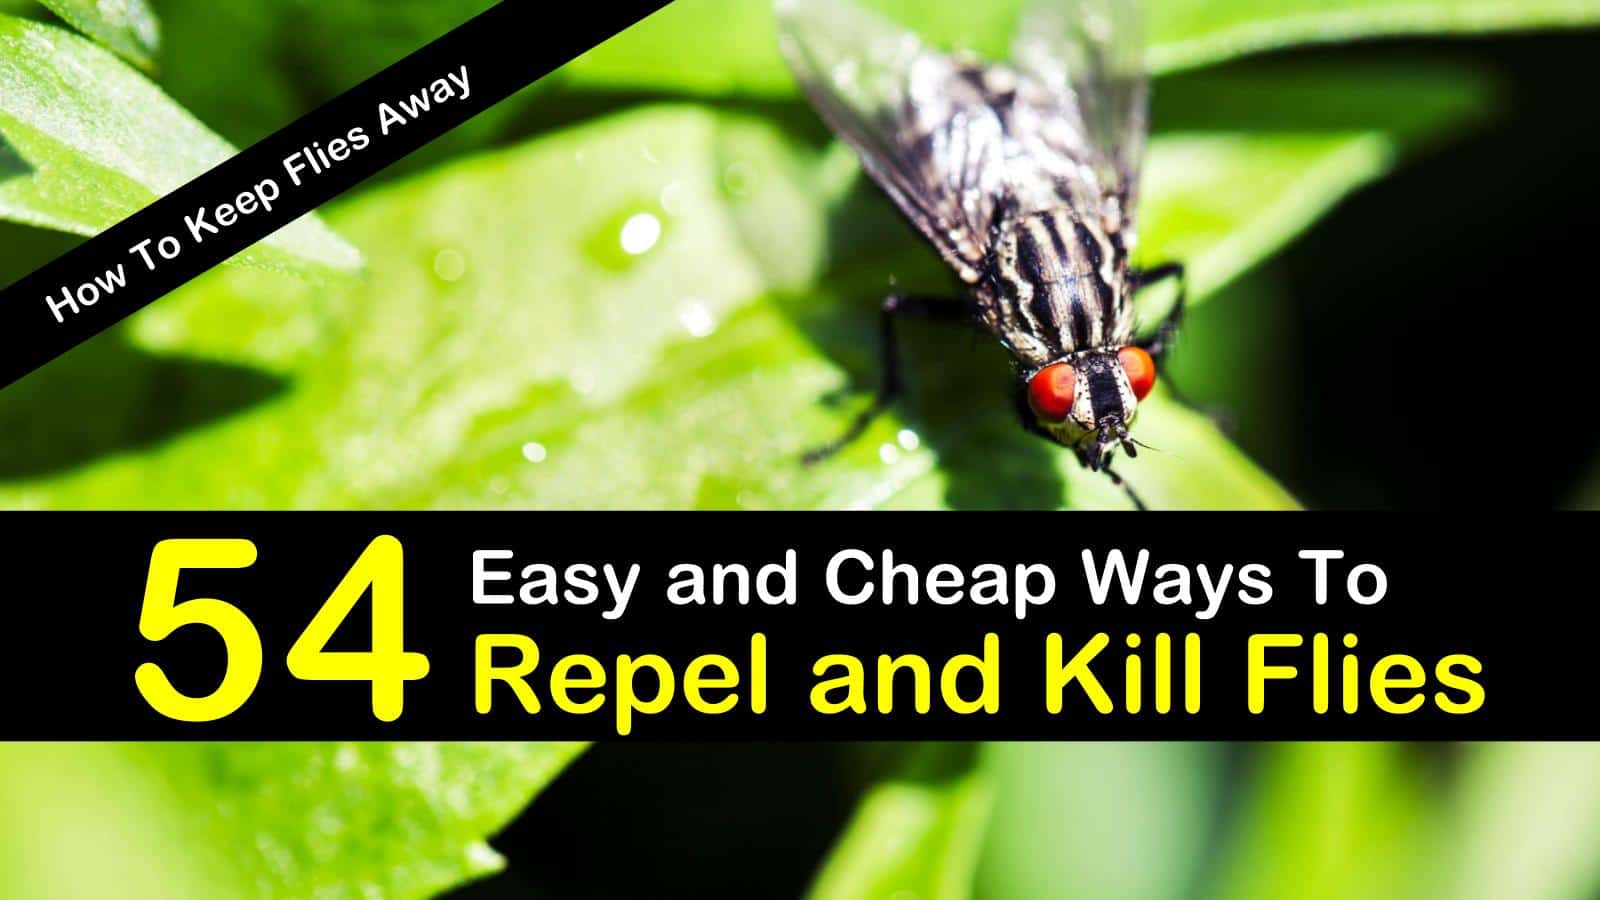 how to kill flies